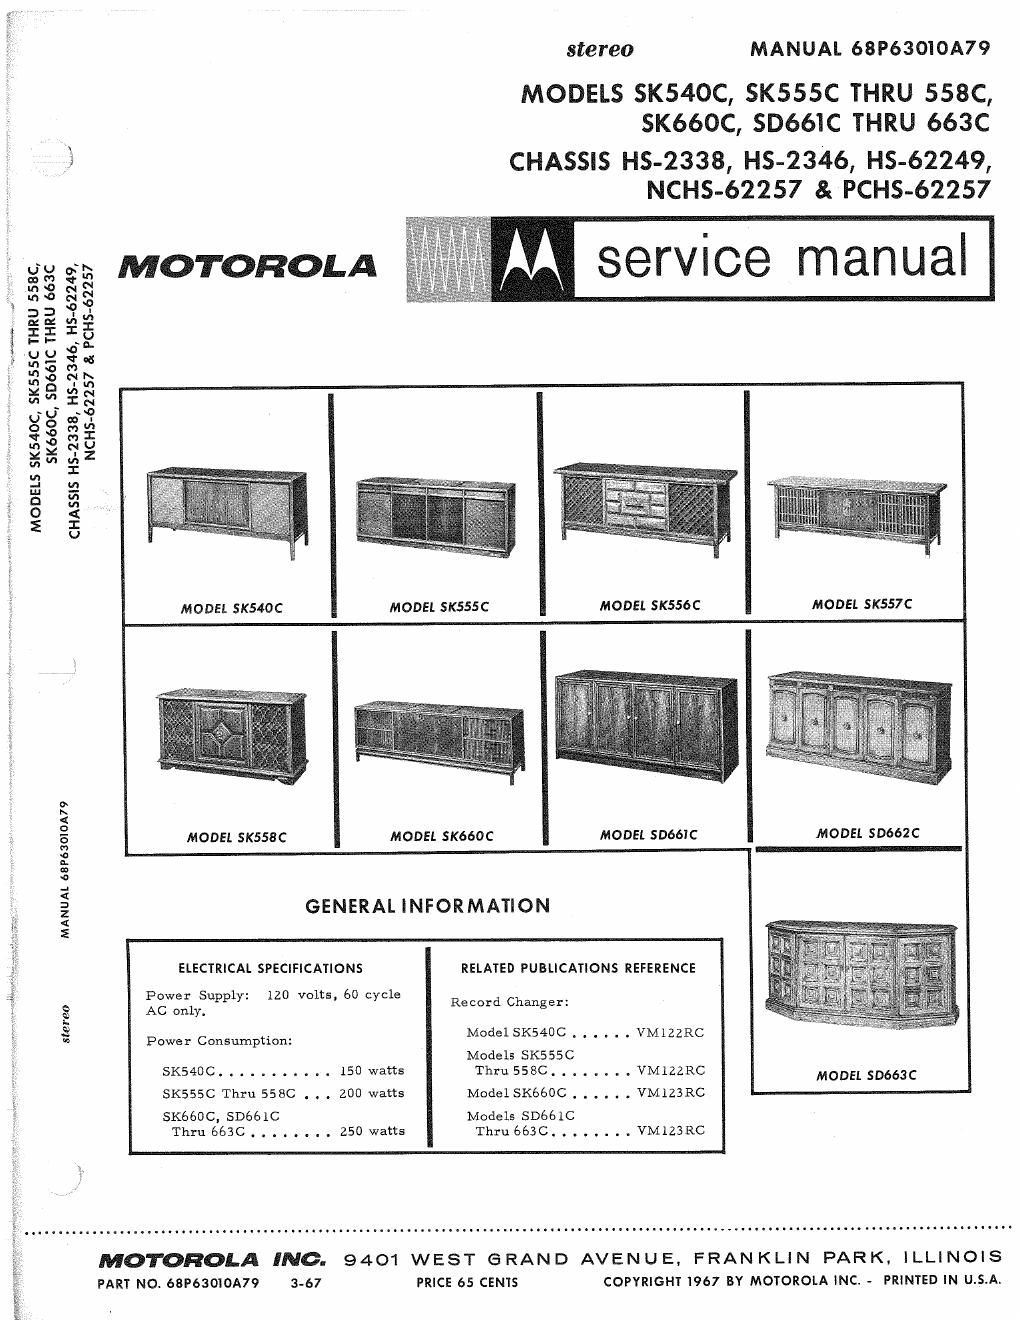 motorola sk 540 c service manual